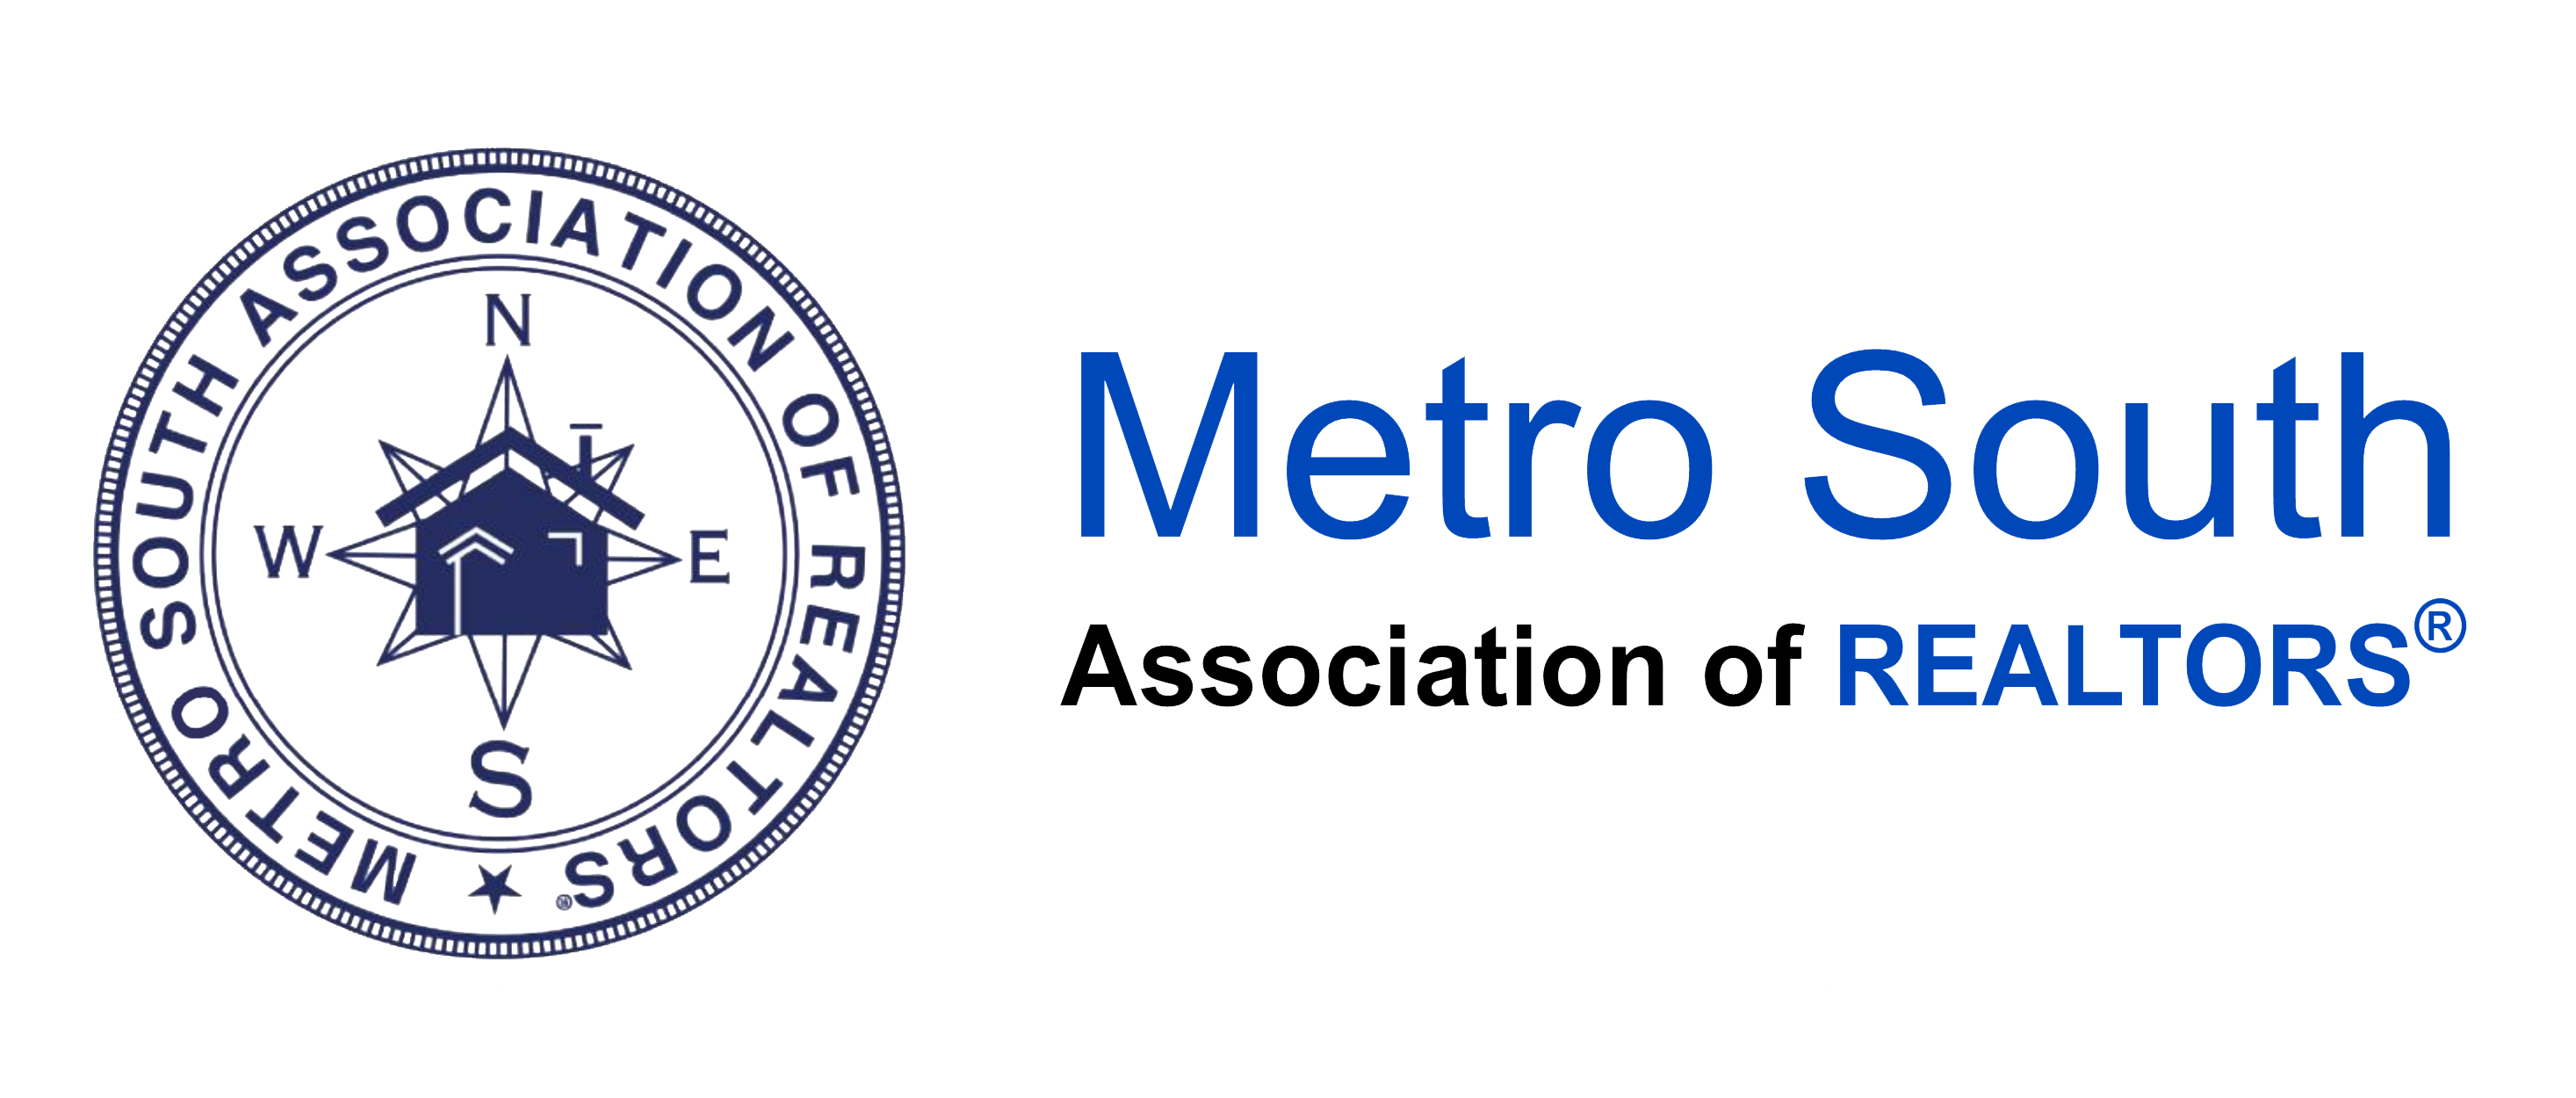 Metro South Association of REALTORS